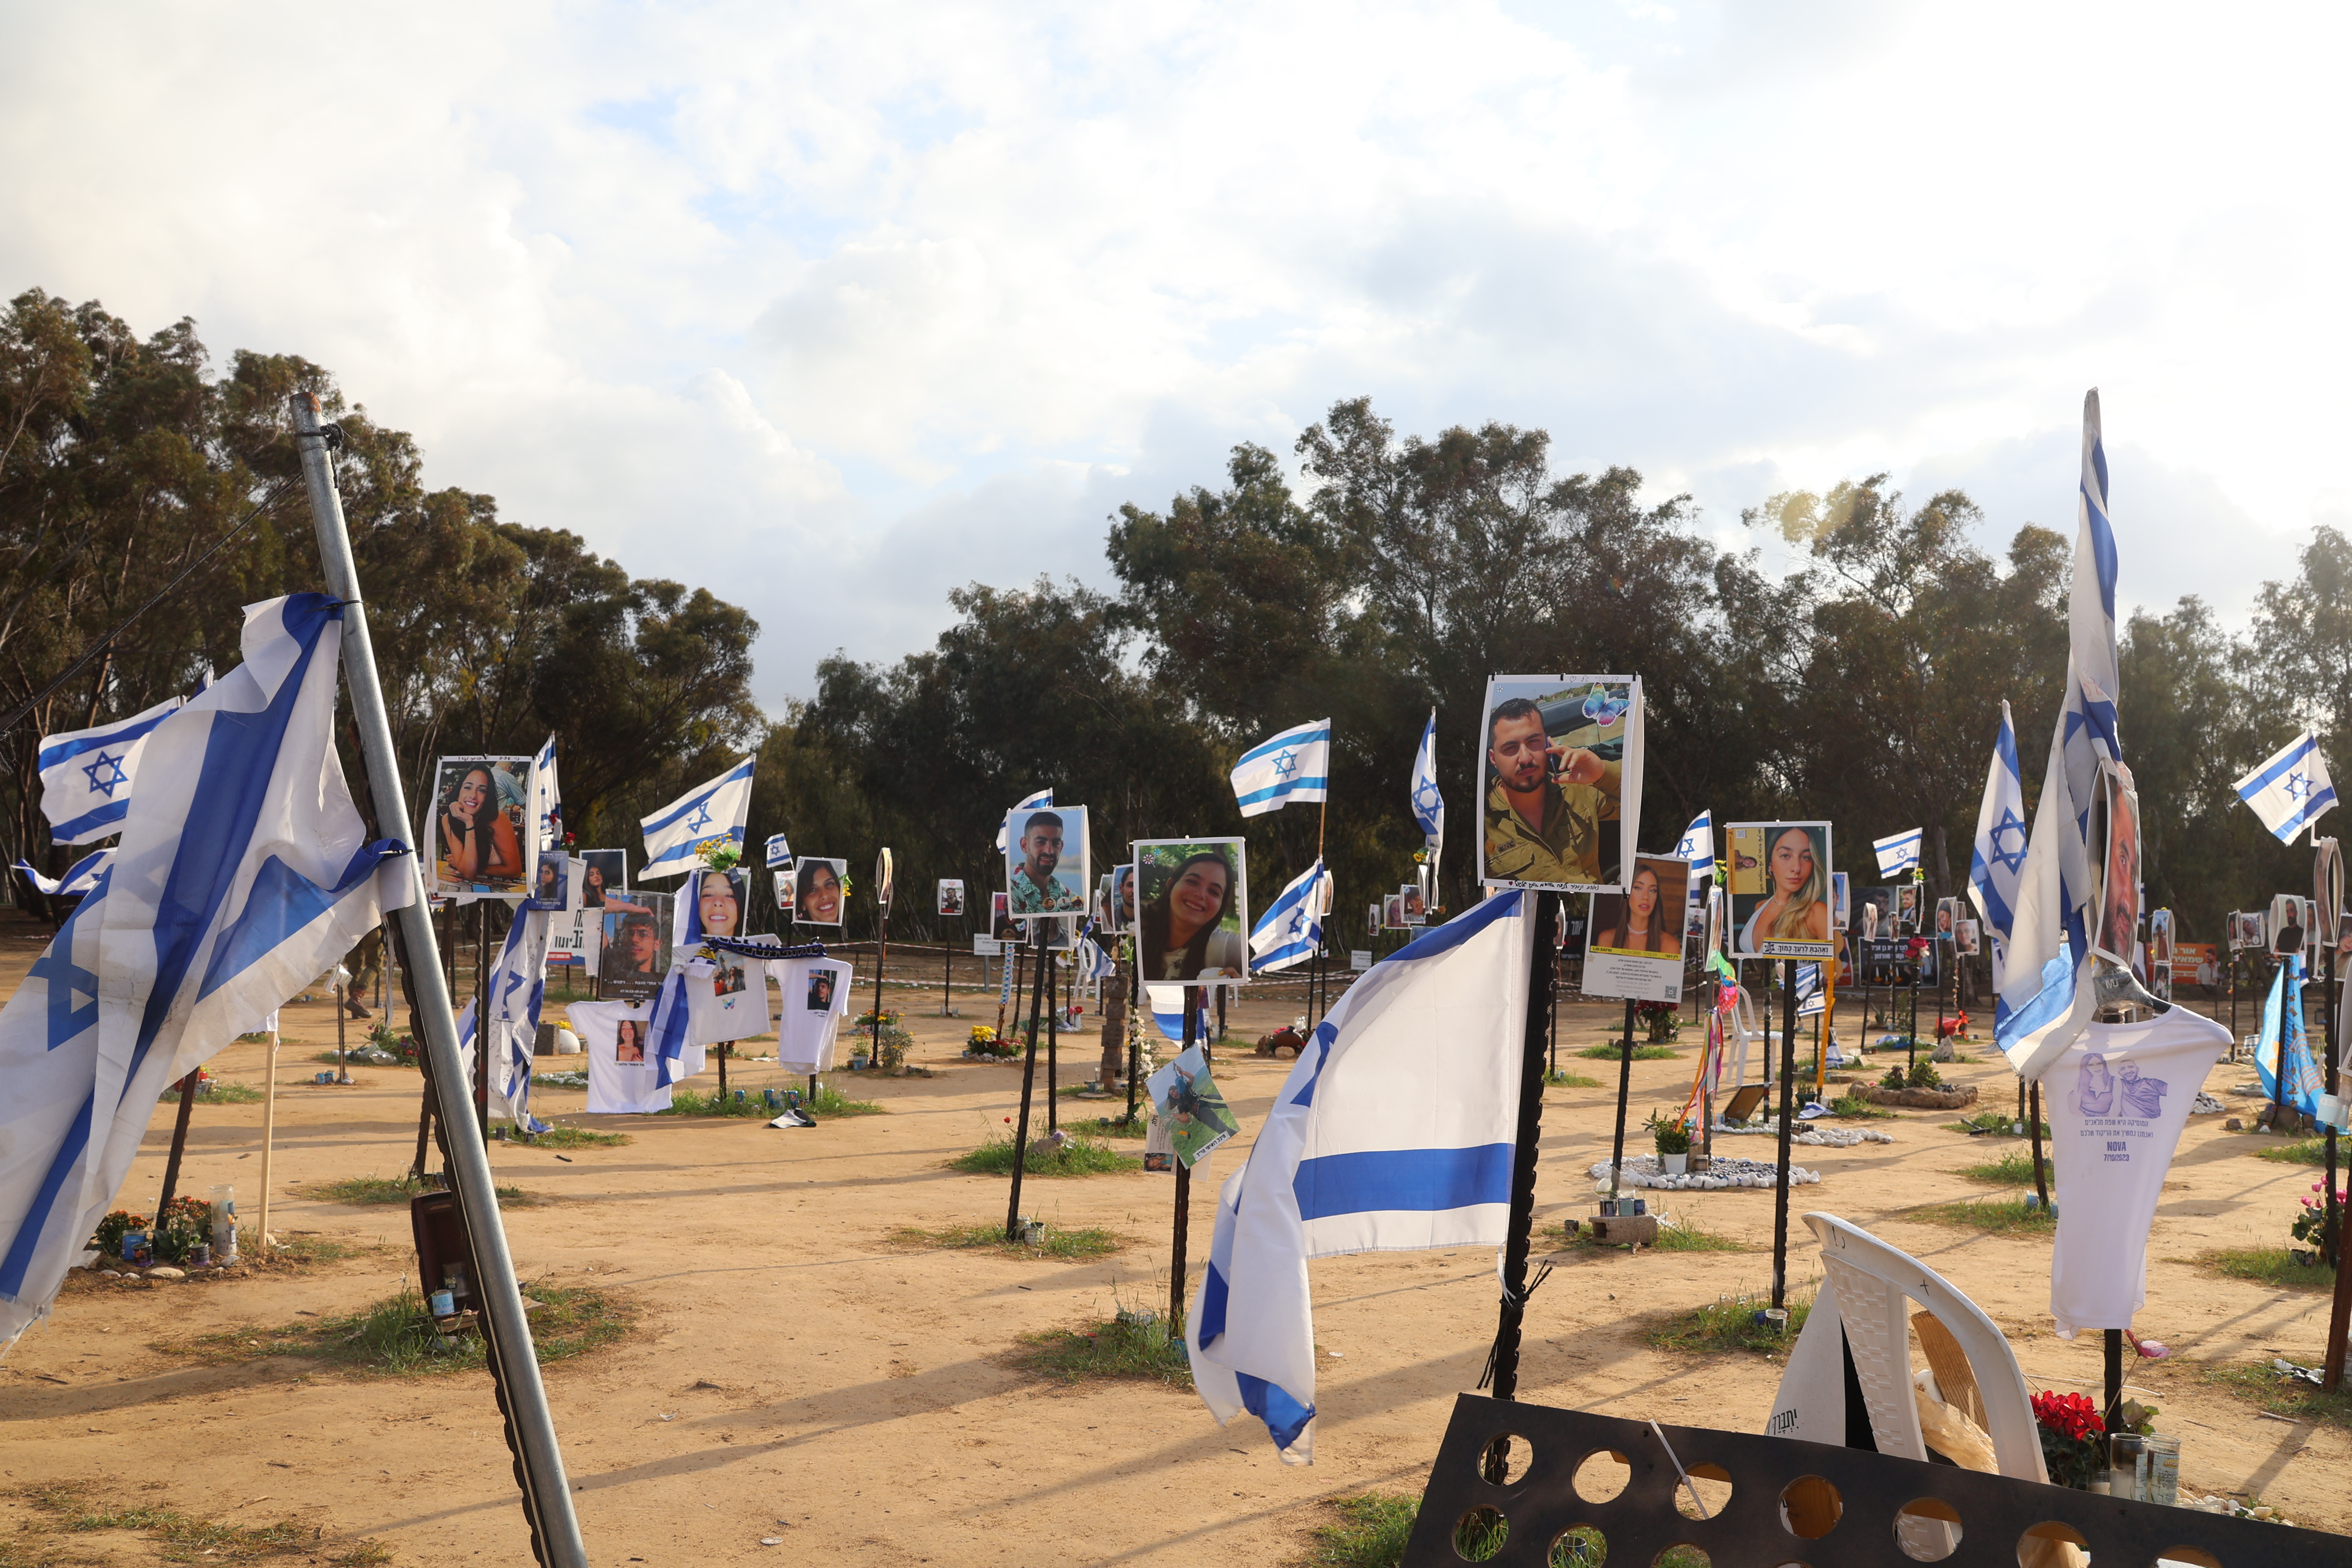 Some of the memorials to victims of the Nova festival near Rei'im